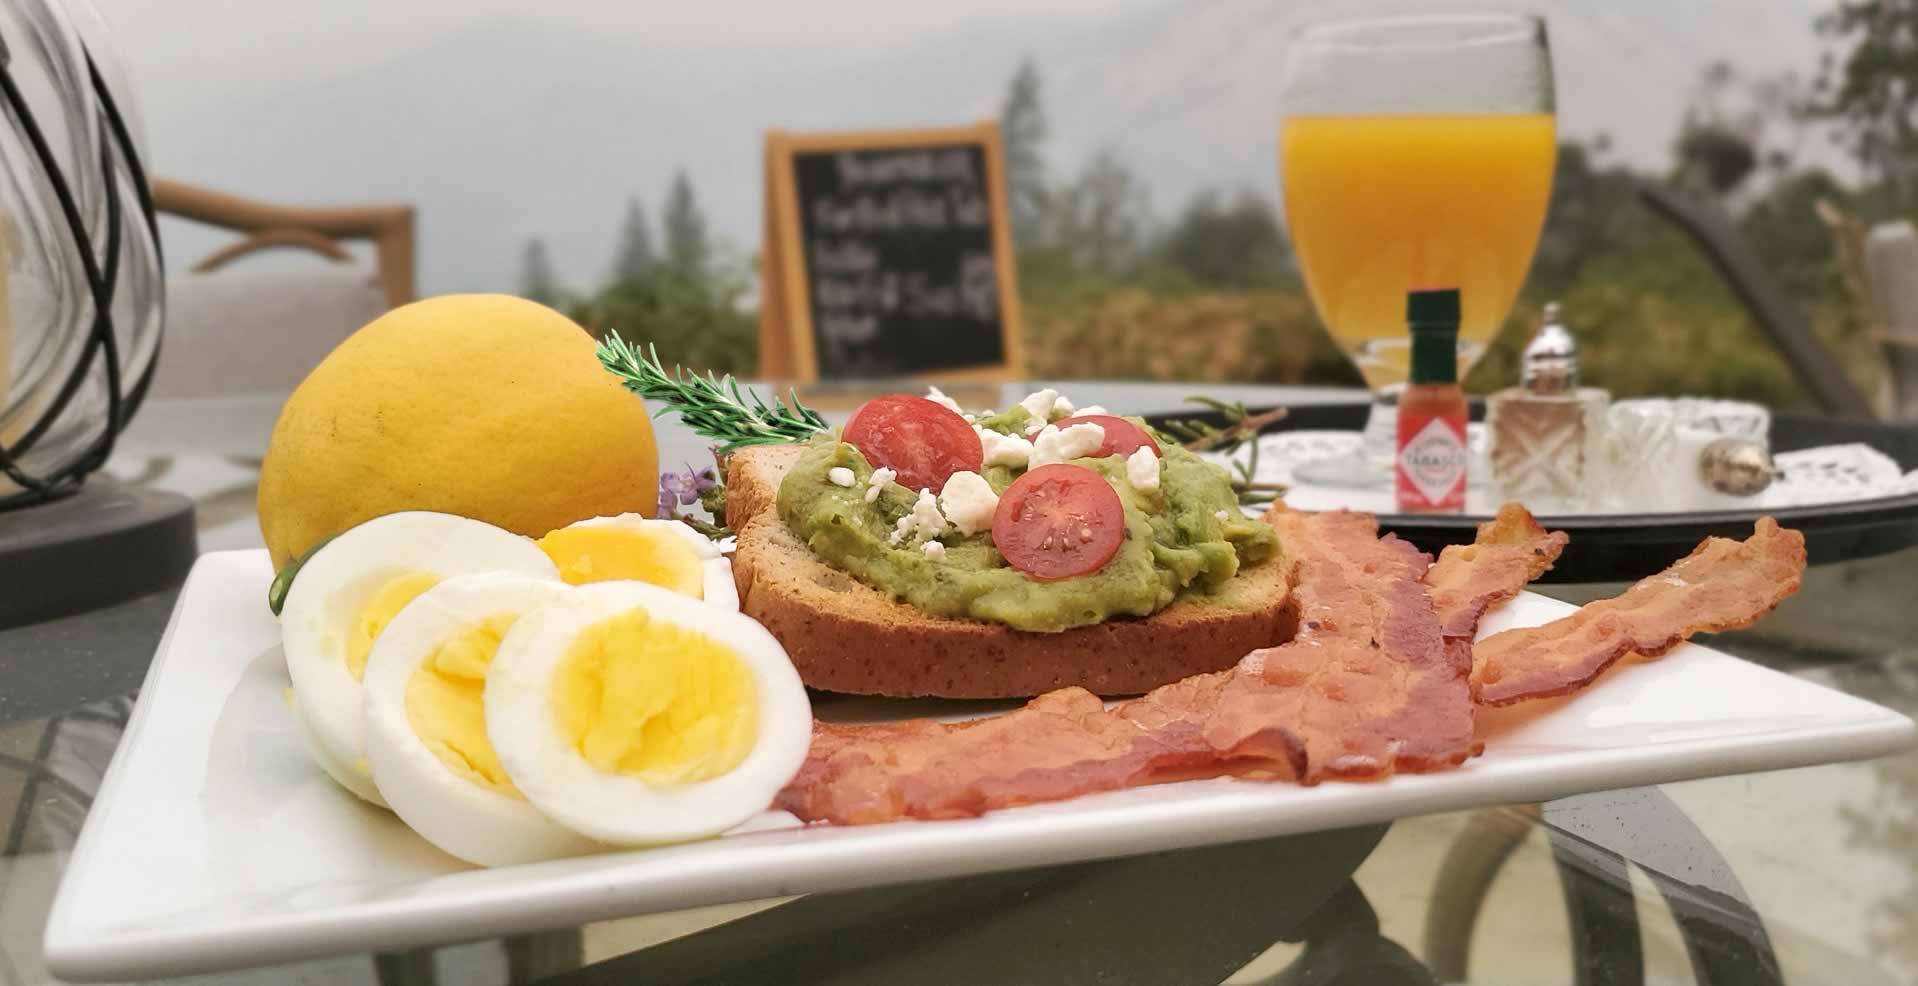 Bella Vista - eggs and avocado toast breakfast